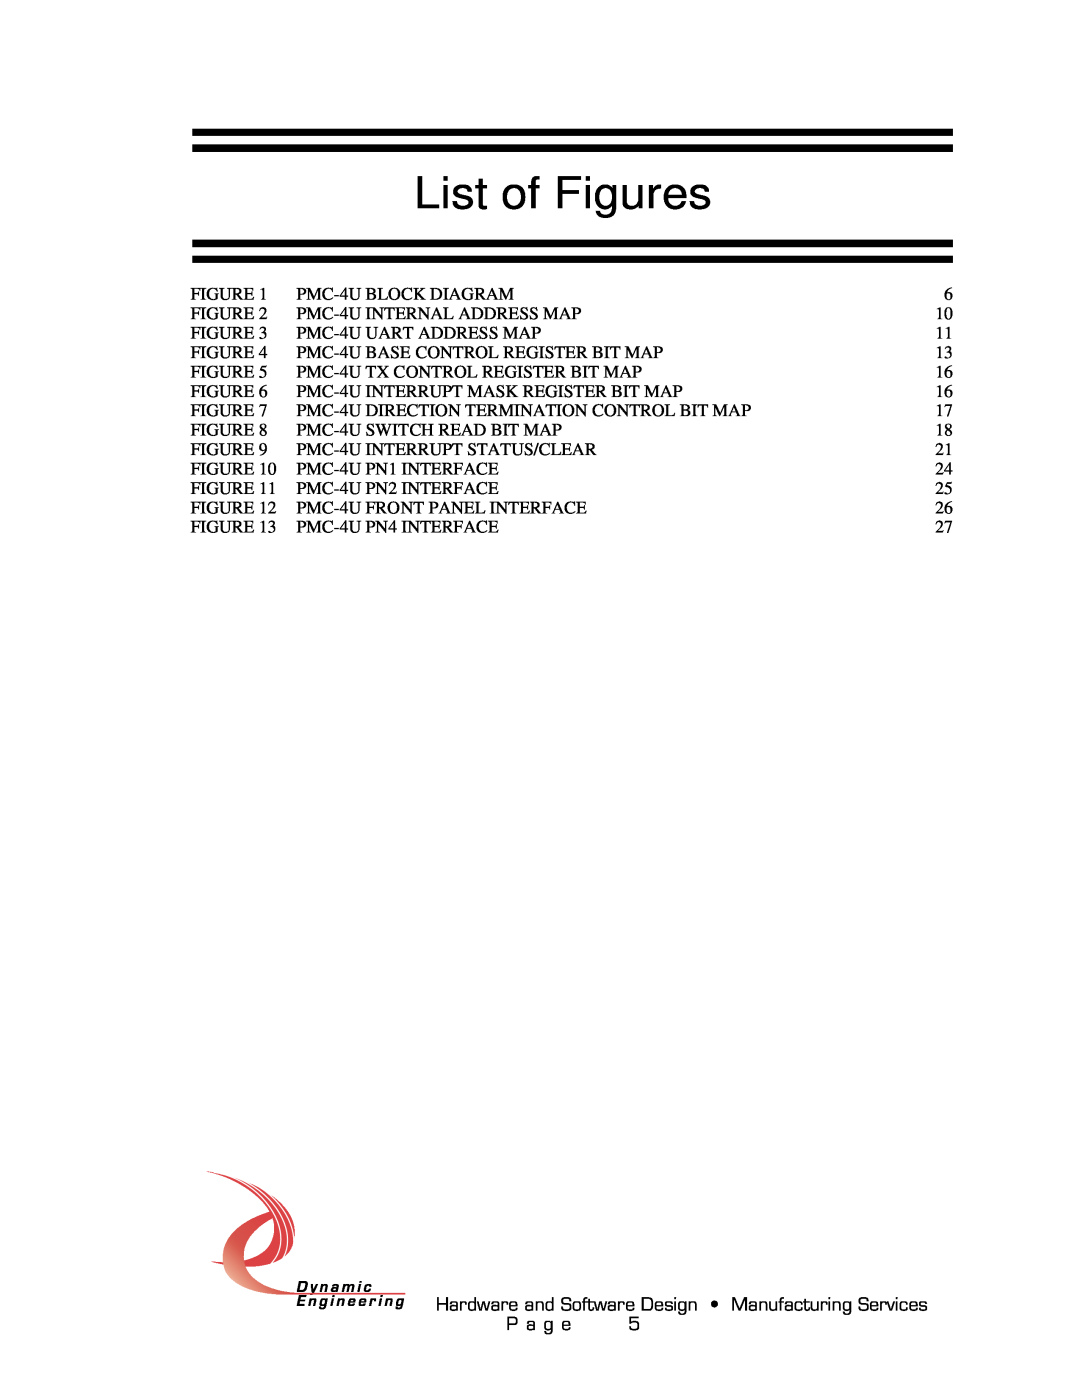 American Dynamics PMC-4U-CACI user manual List of Figures 